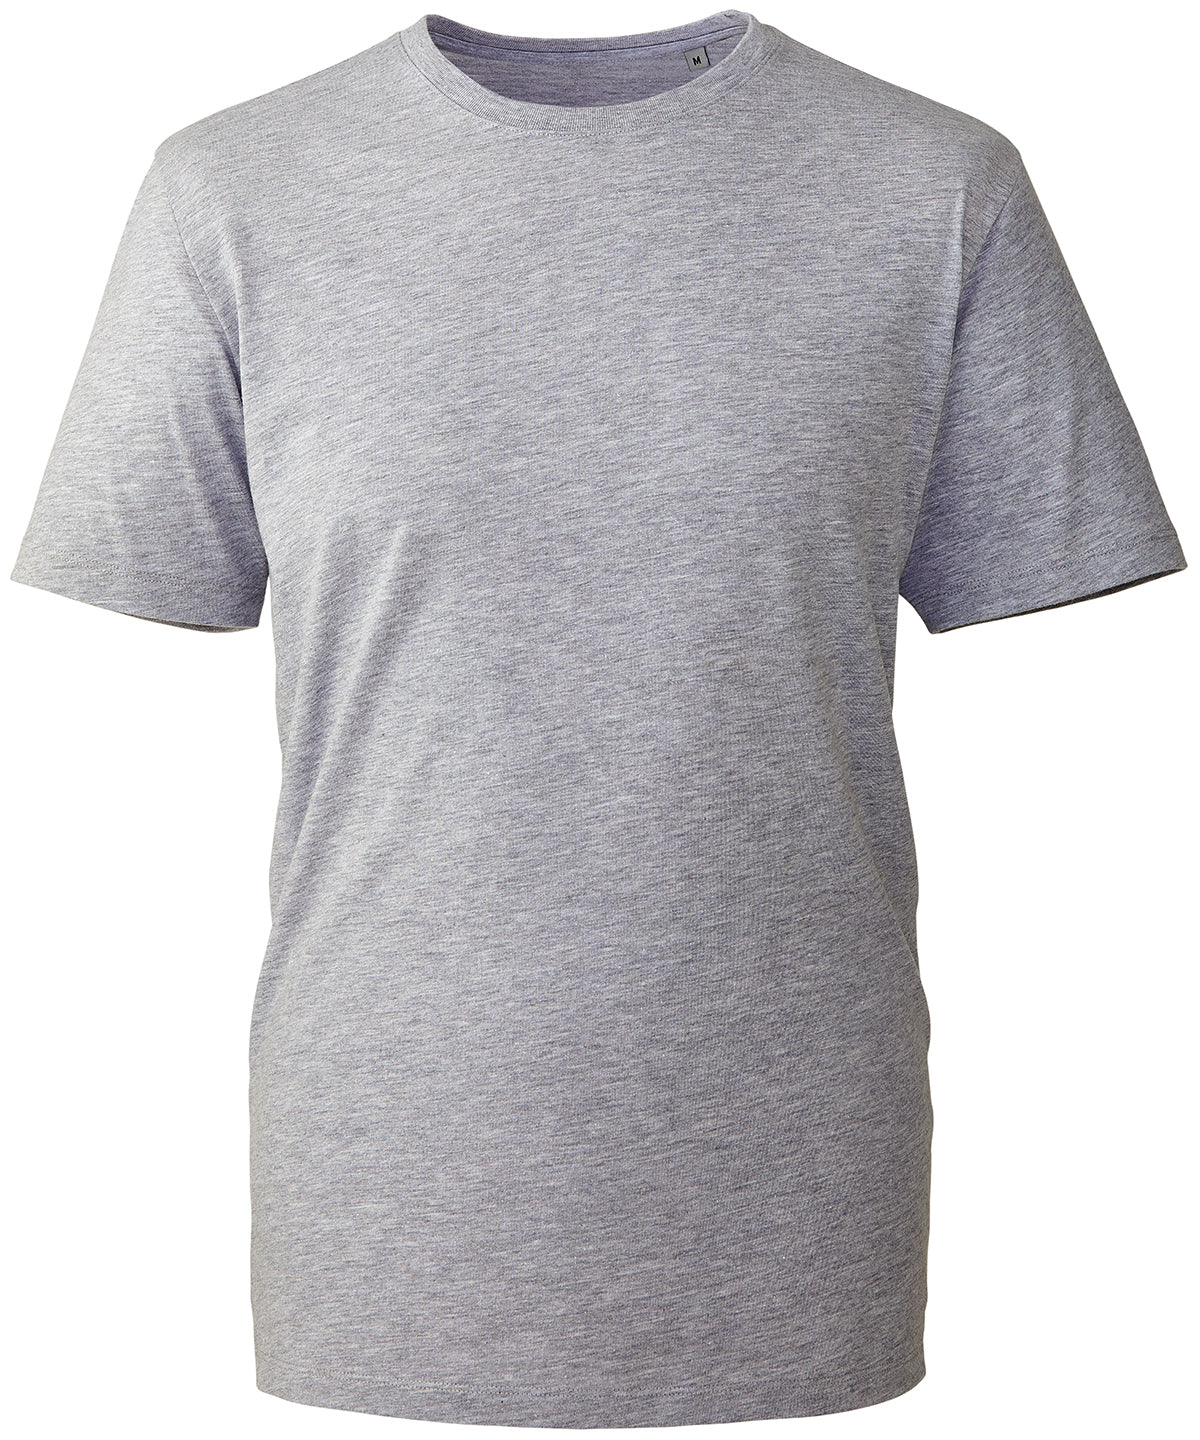 Anthem t-shirt Grey Marl